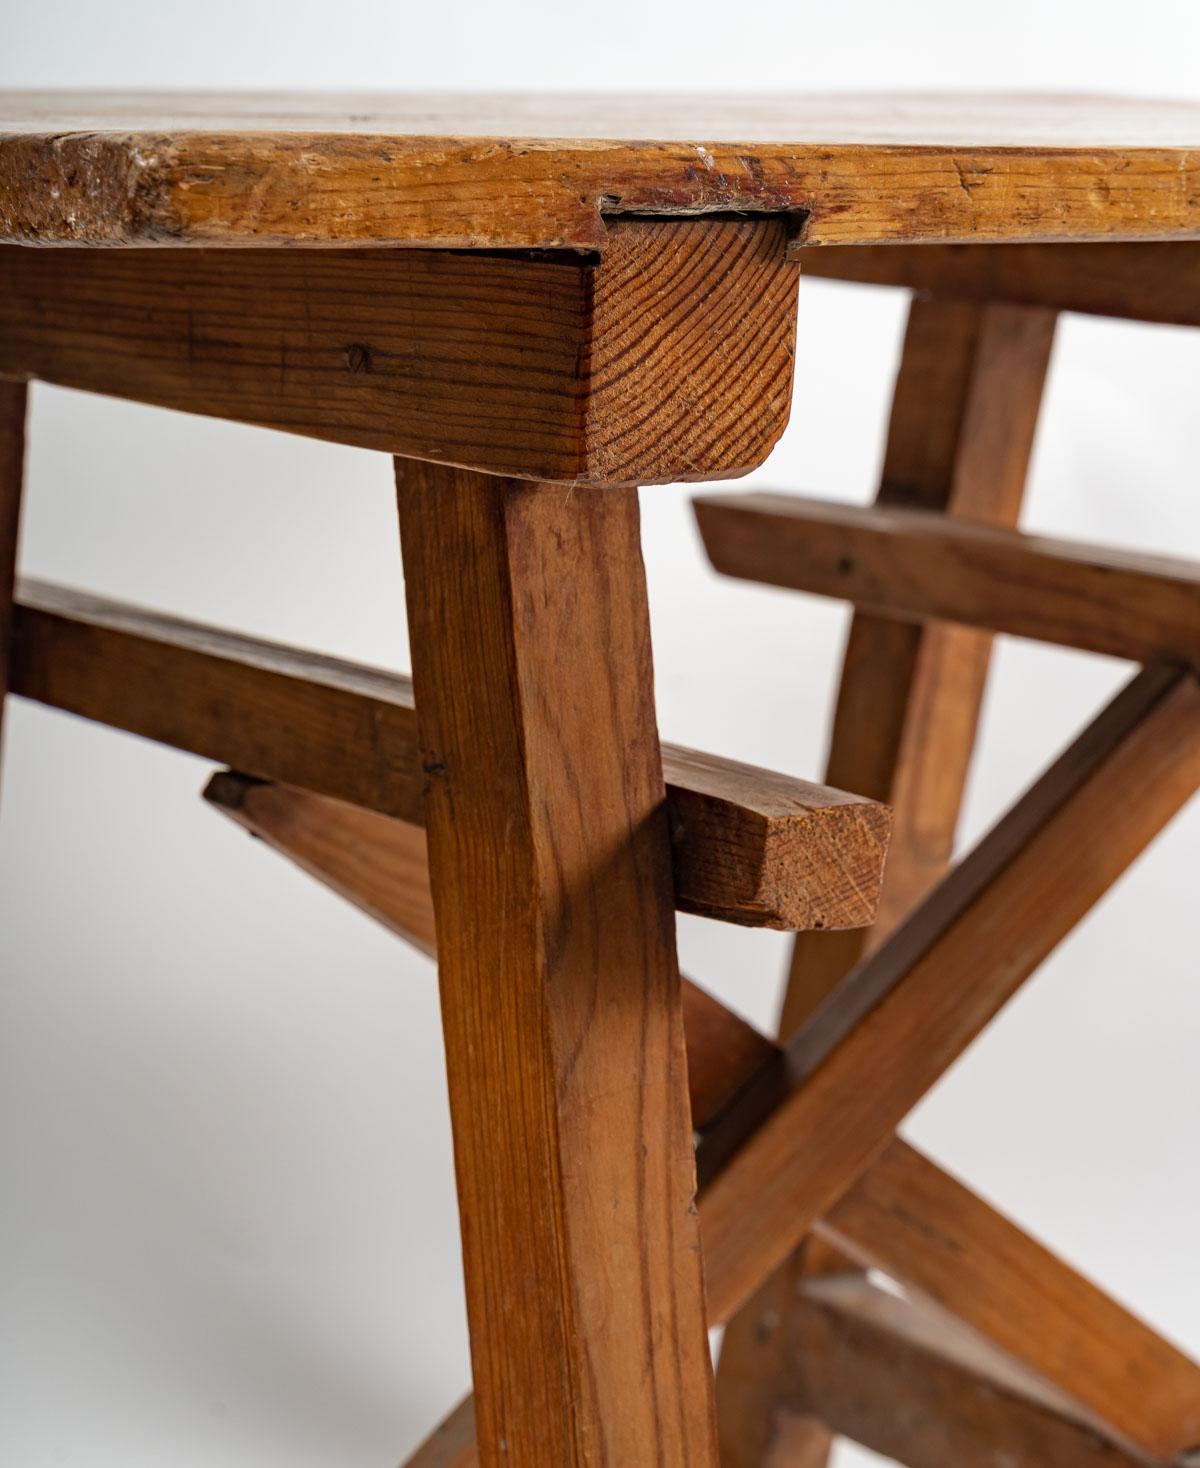 Sculpture stand, artist's studio furniture, X-shaped table, 20th century.

Measures: H: 63 cm, W: 74 cm, D: 57 cm.